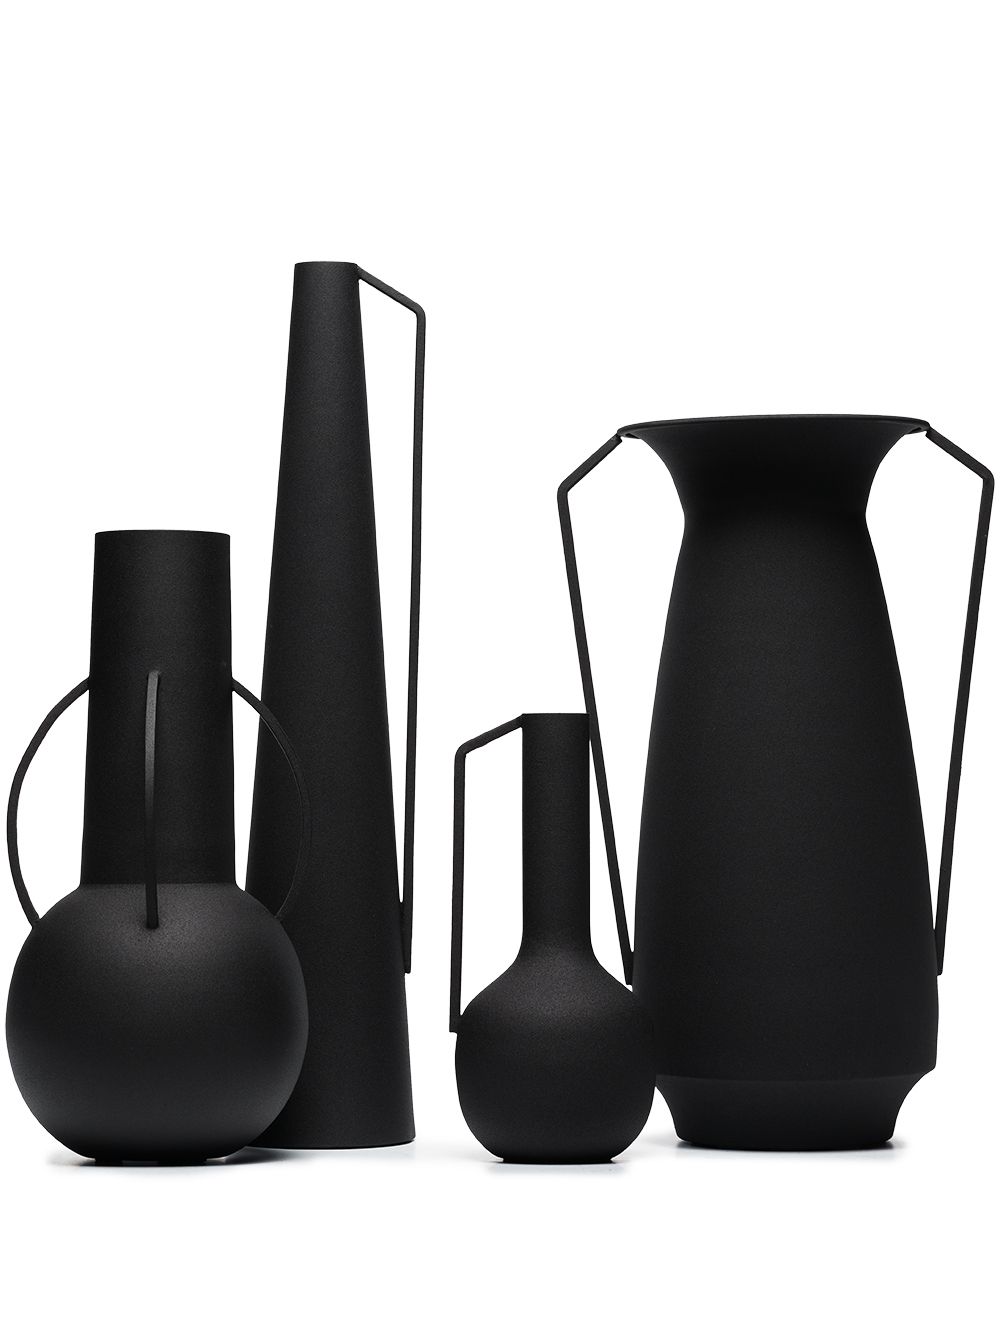 POLSPOTTEN Roman powder-coated vases (set of 4) - Black